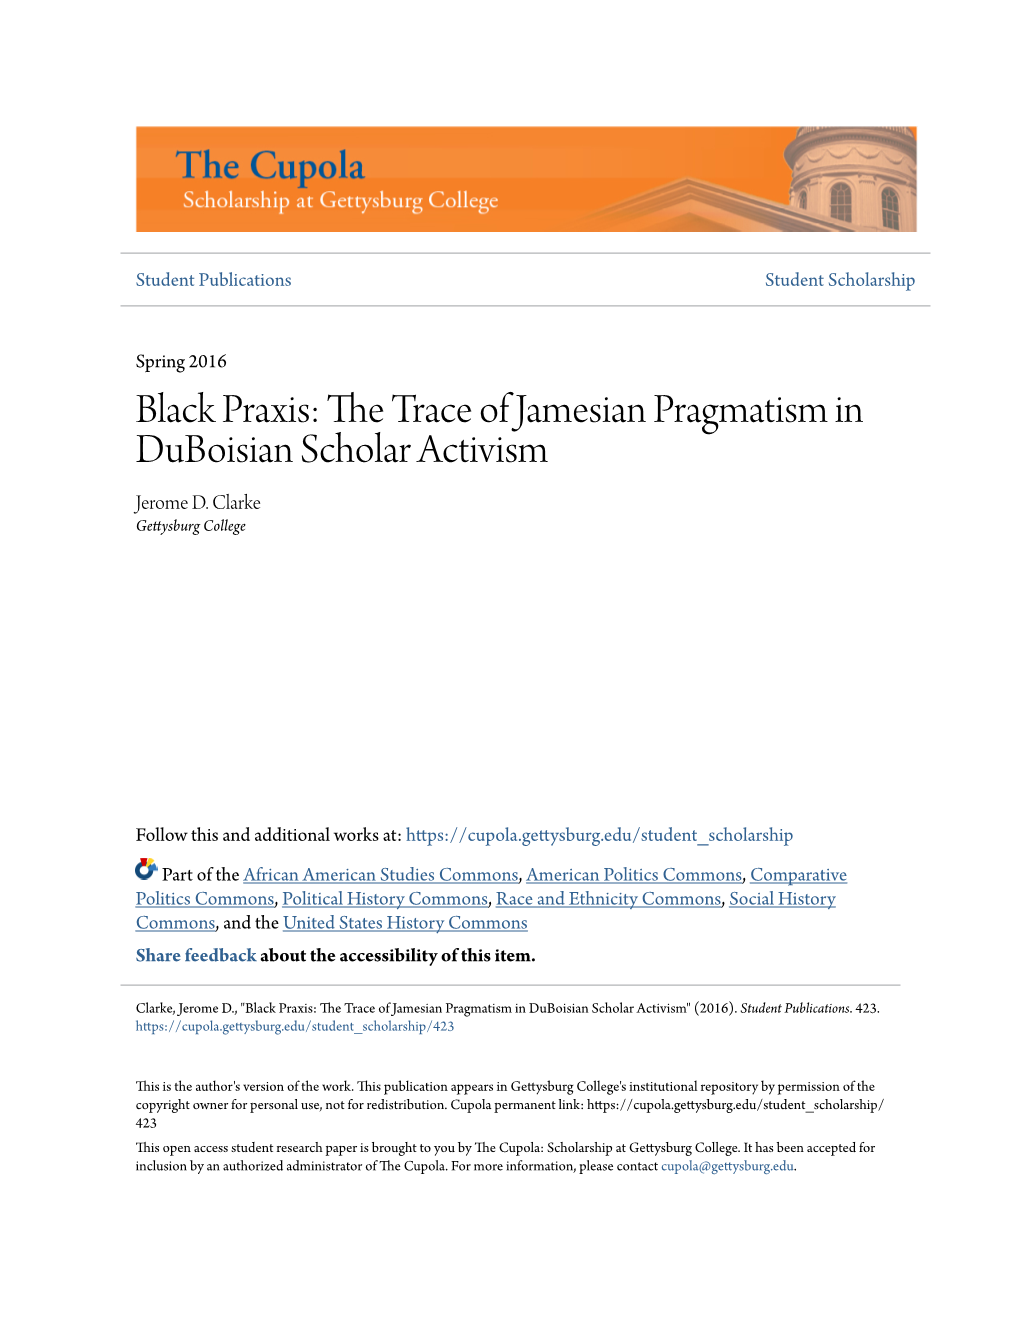 The Trace of Jamesian Pragmatism in Duboisian Scholar Activism